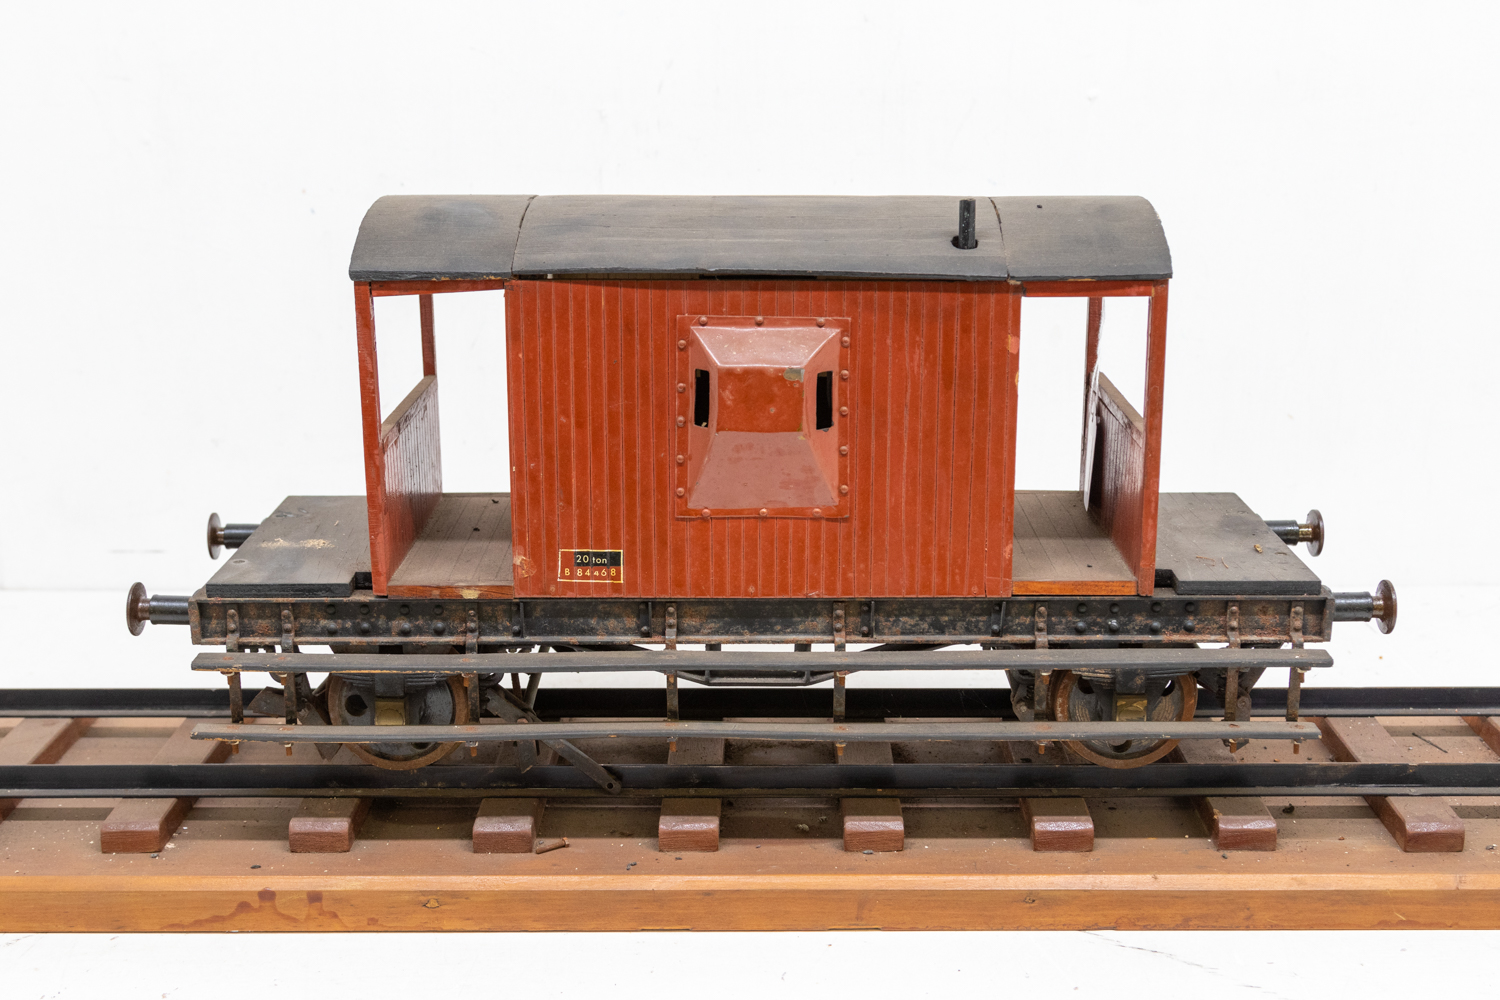 Model Railway: A scratch-built model railway, 3 1/2" gauge, rolling stock wagon, upon track, 20 Ton, - Bild 4 aus 4